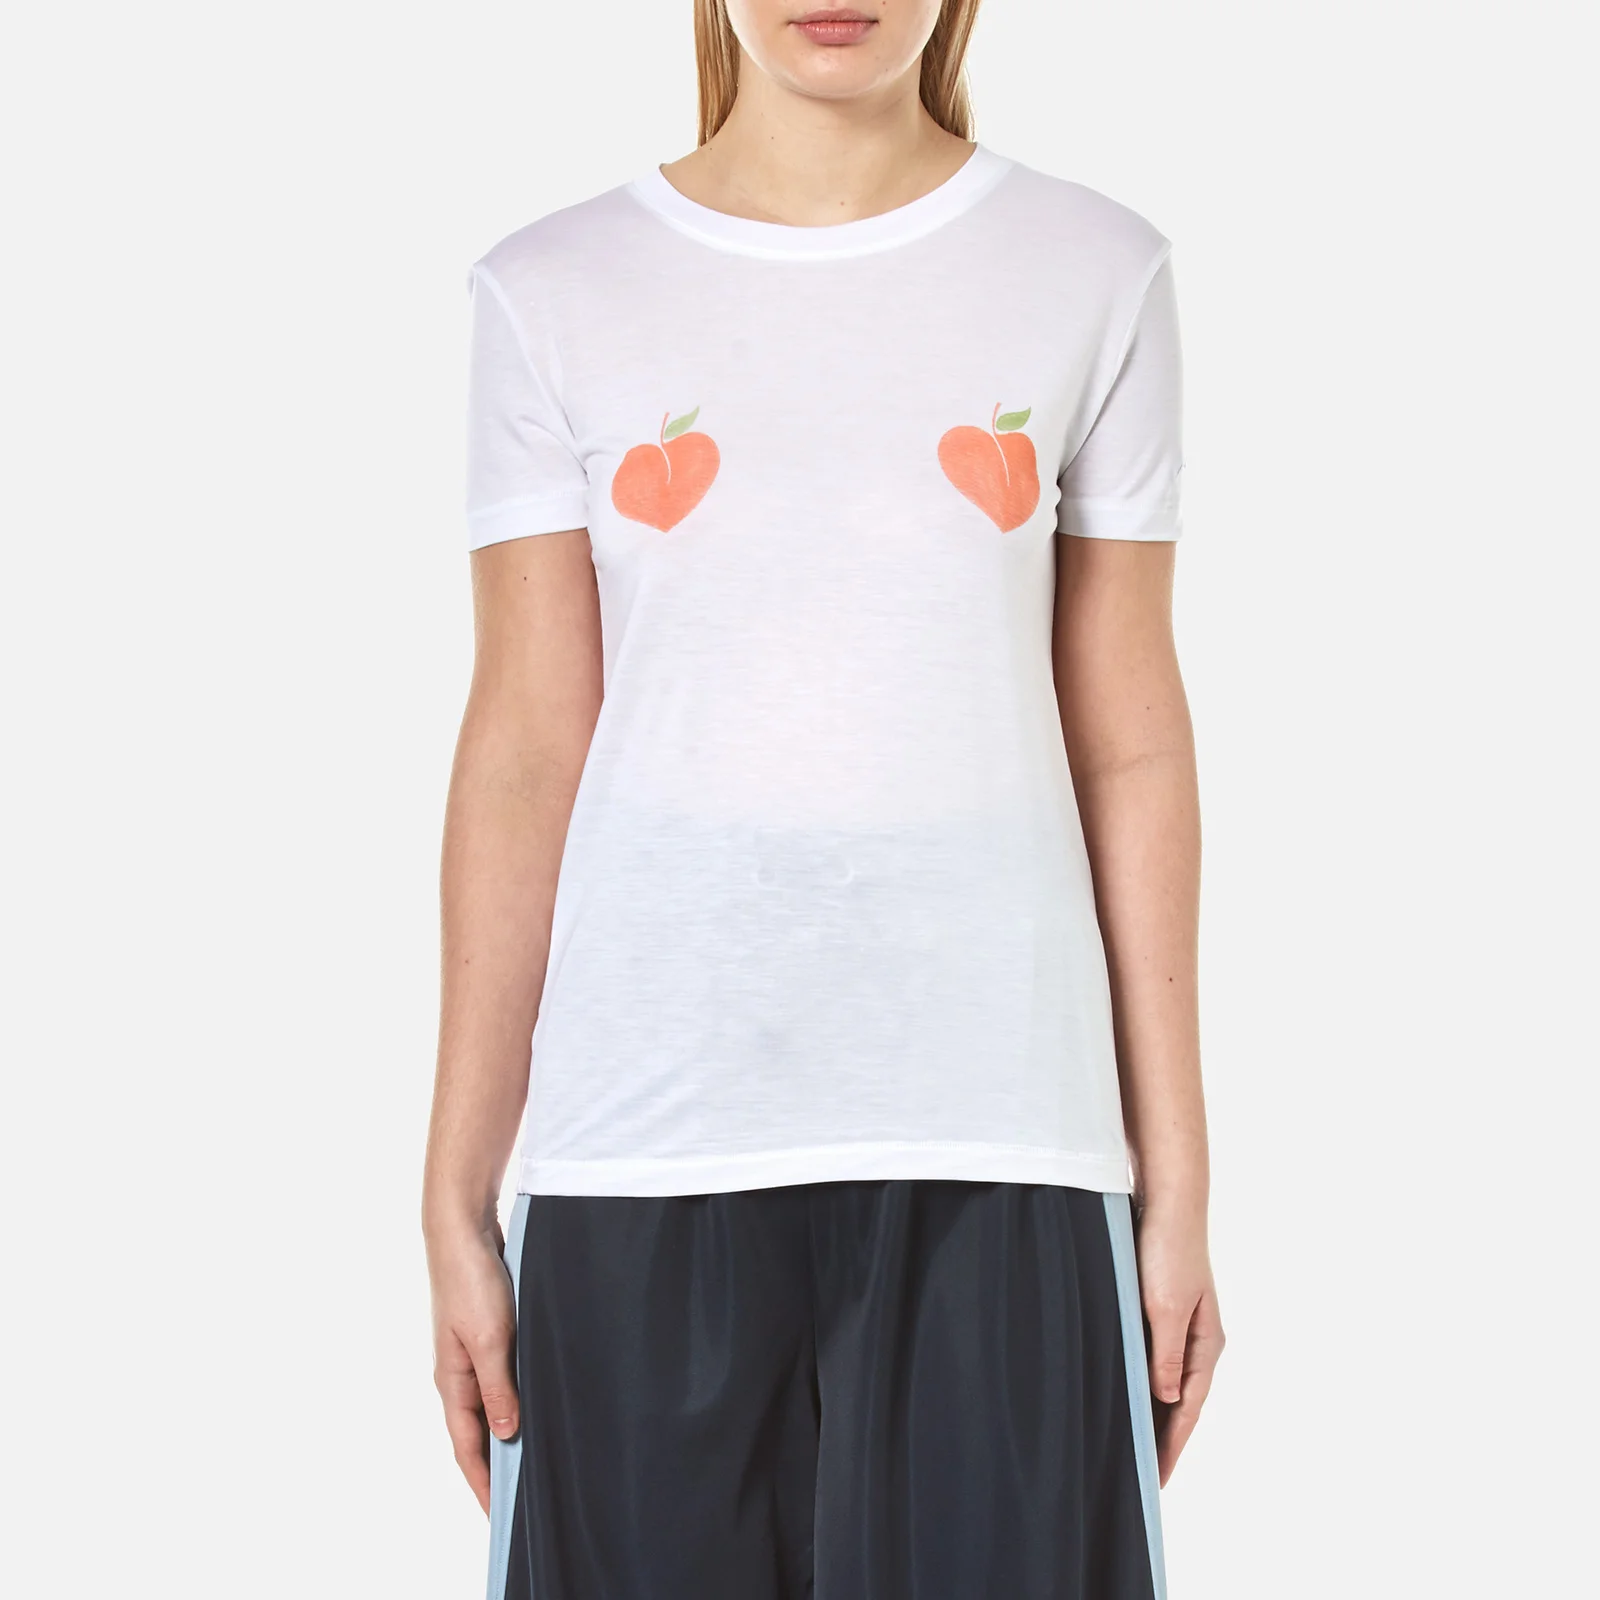 Ganni Women's Linfield Peach T-Shirt - Bright White Image 1